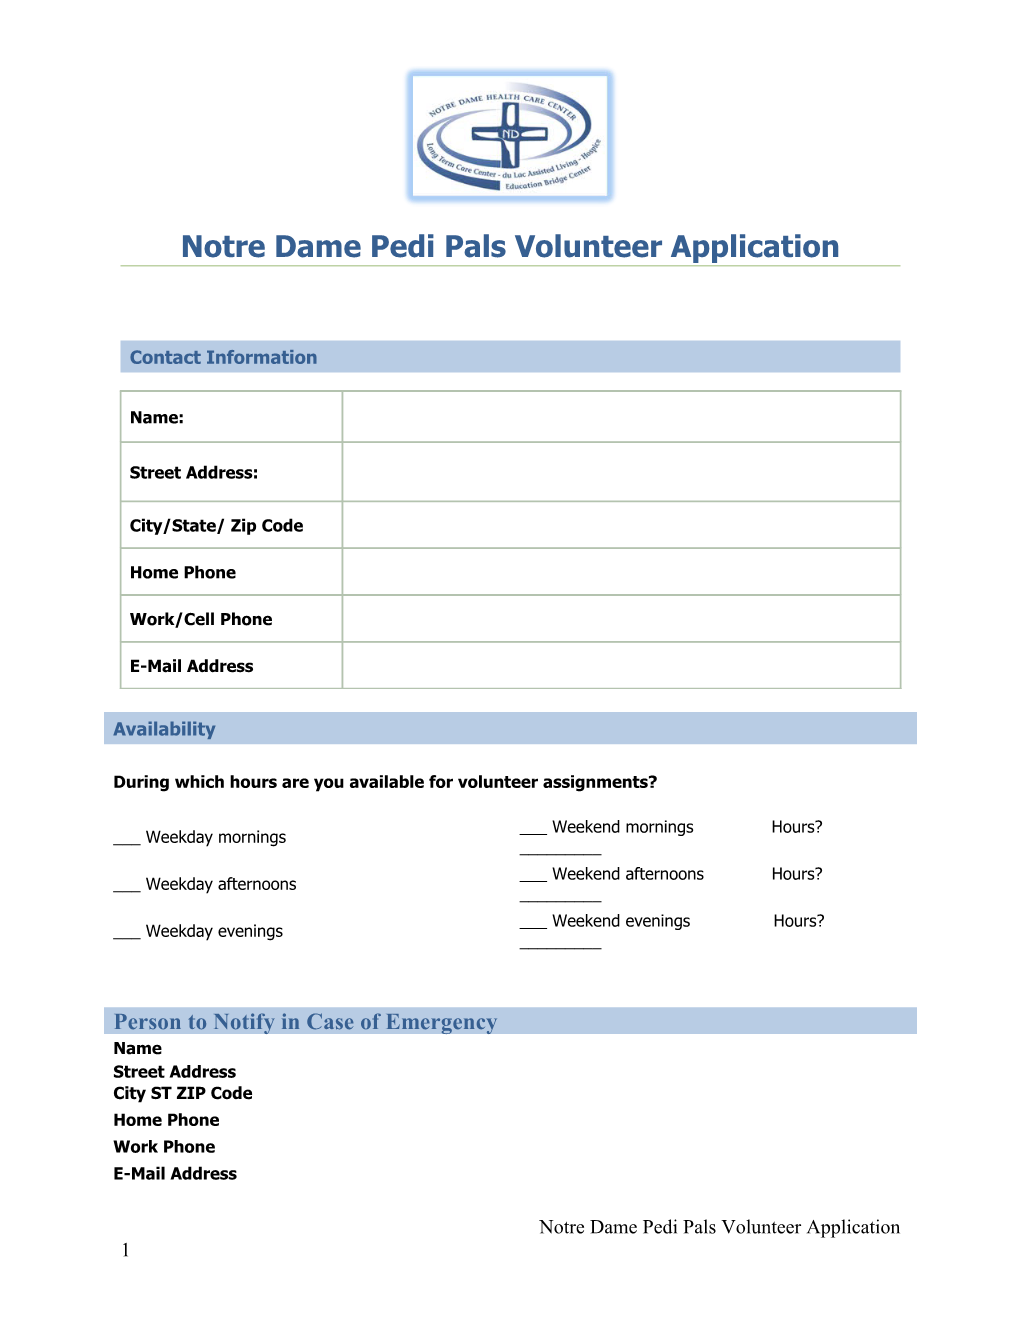 Notre Dame Pedi Pals Volunteer Application